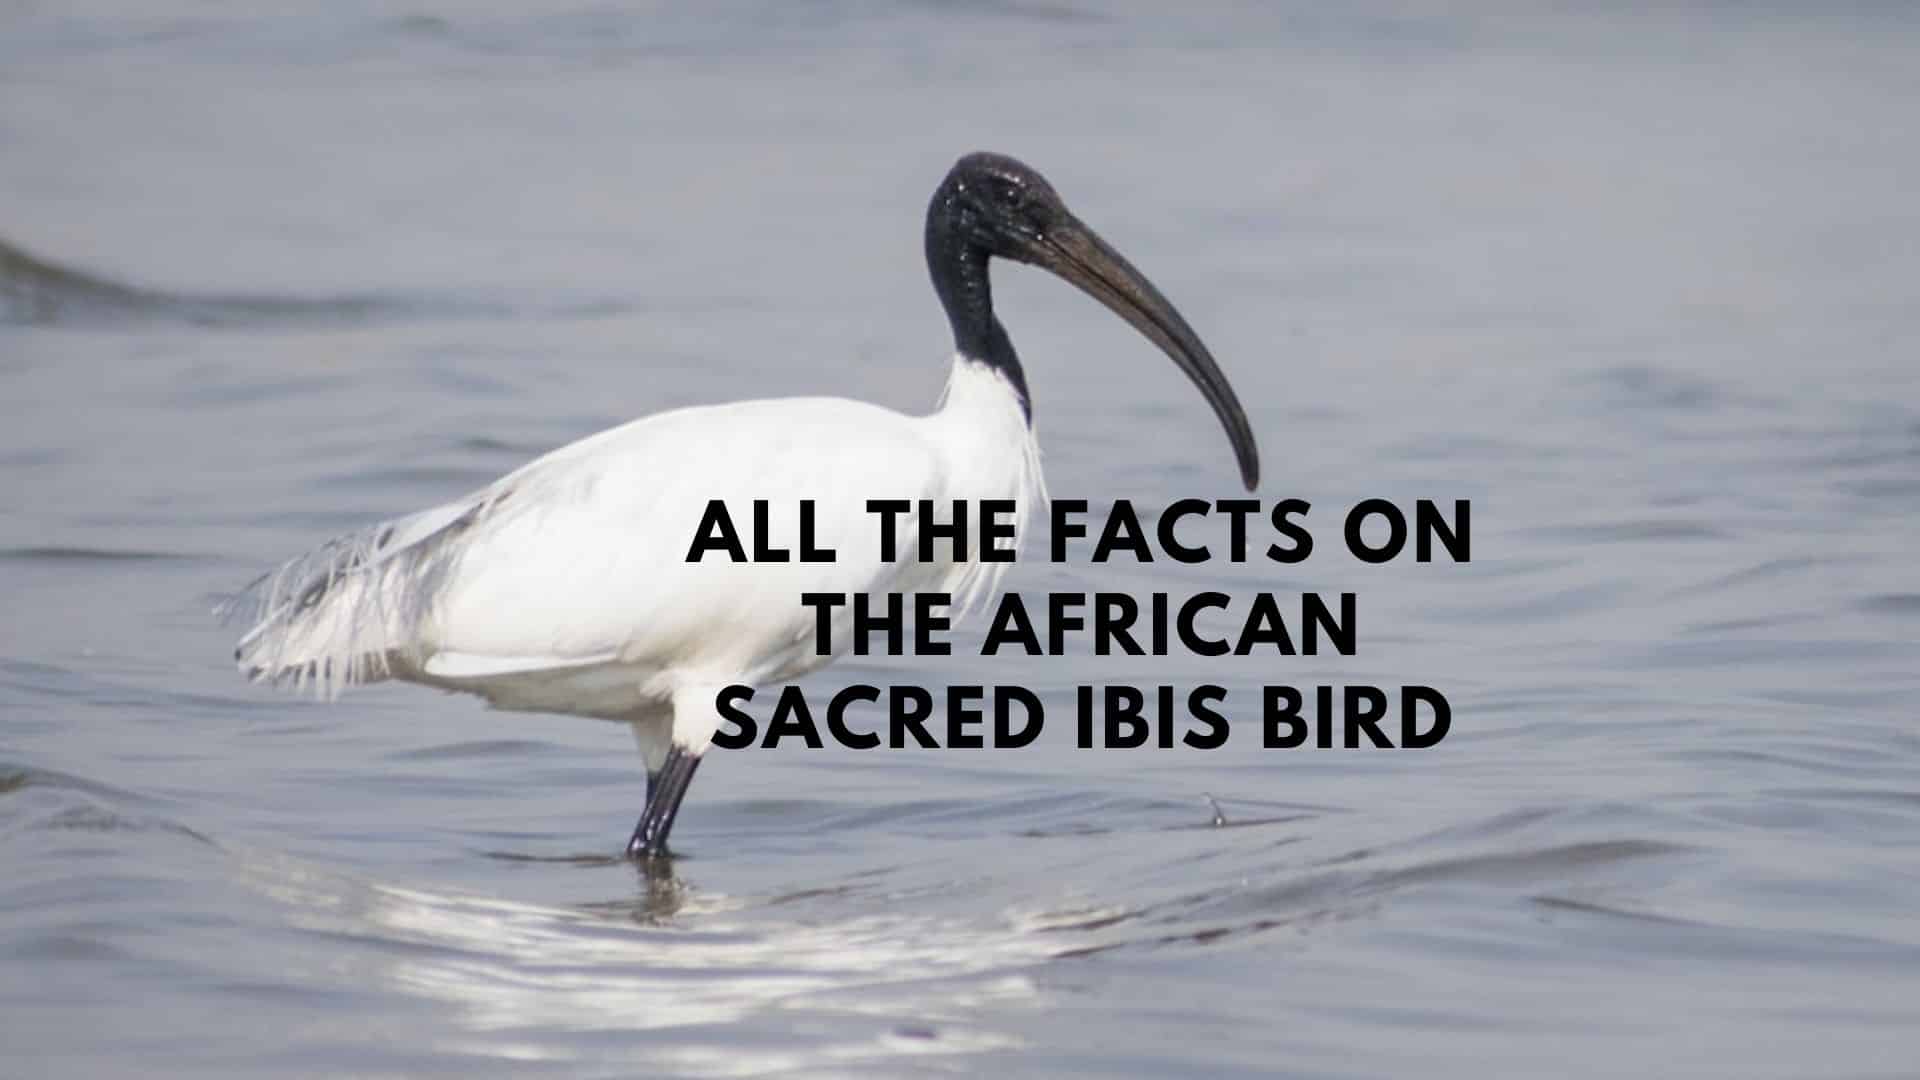 The African sacred ibis bird